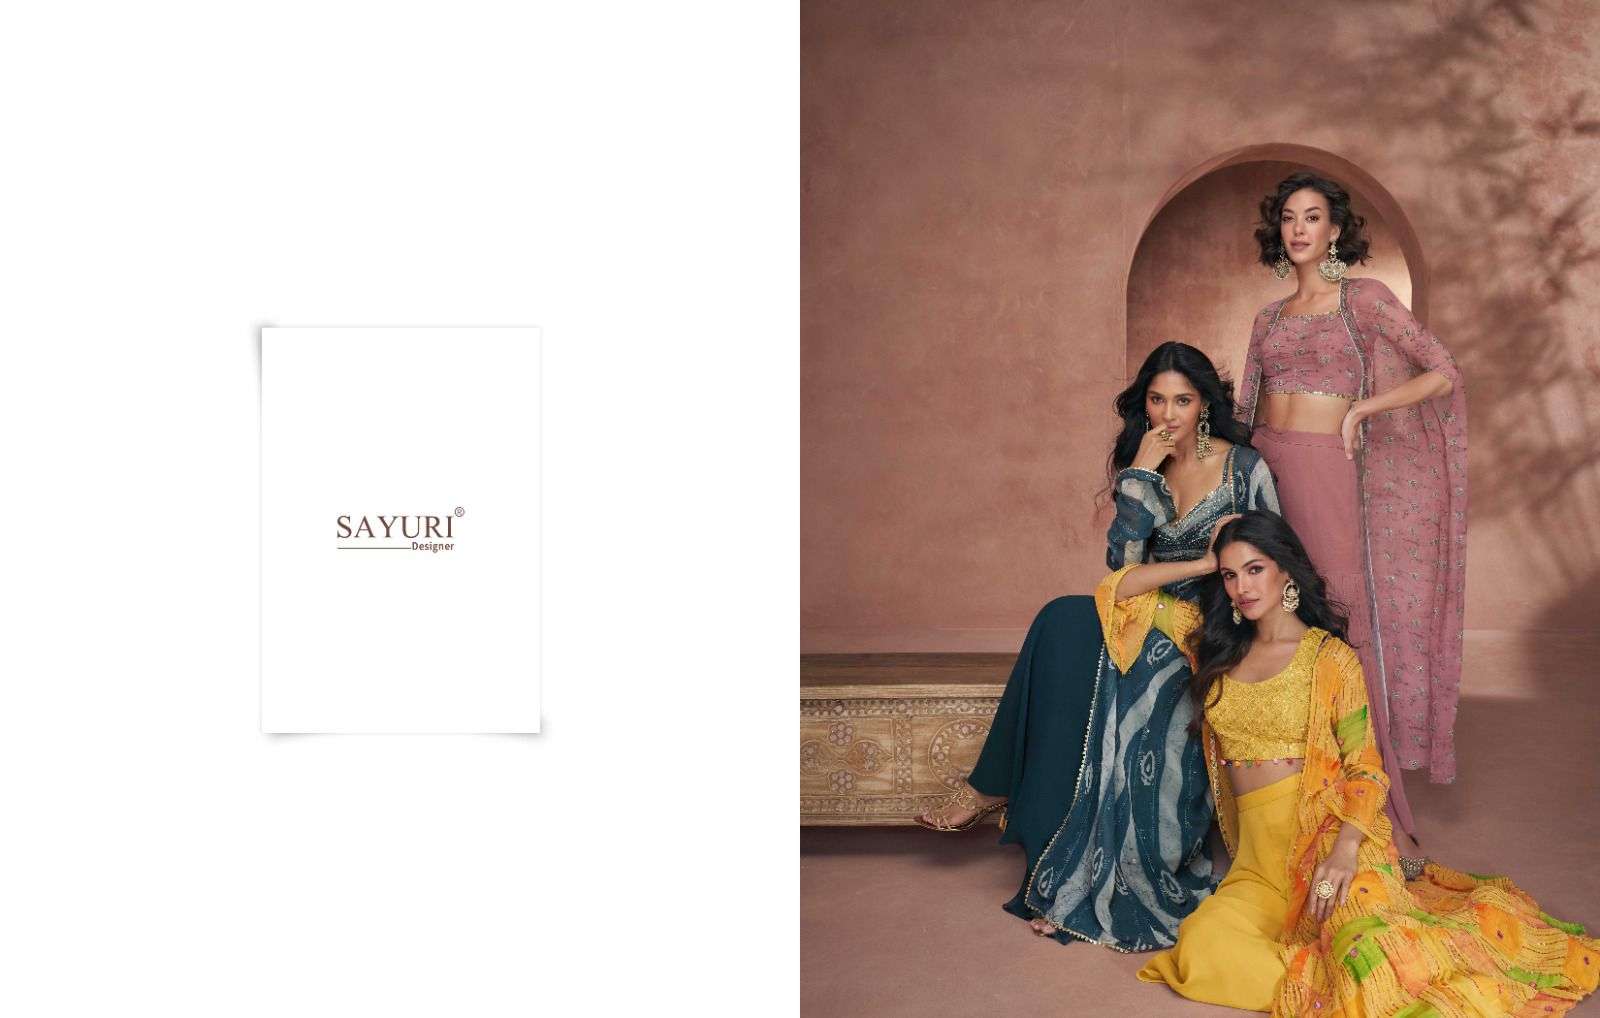 sayuri utsav 5292-5295 series designer latest indo western outfit wholesaler surat gujarat